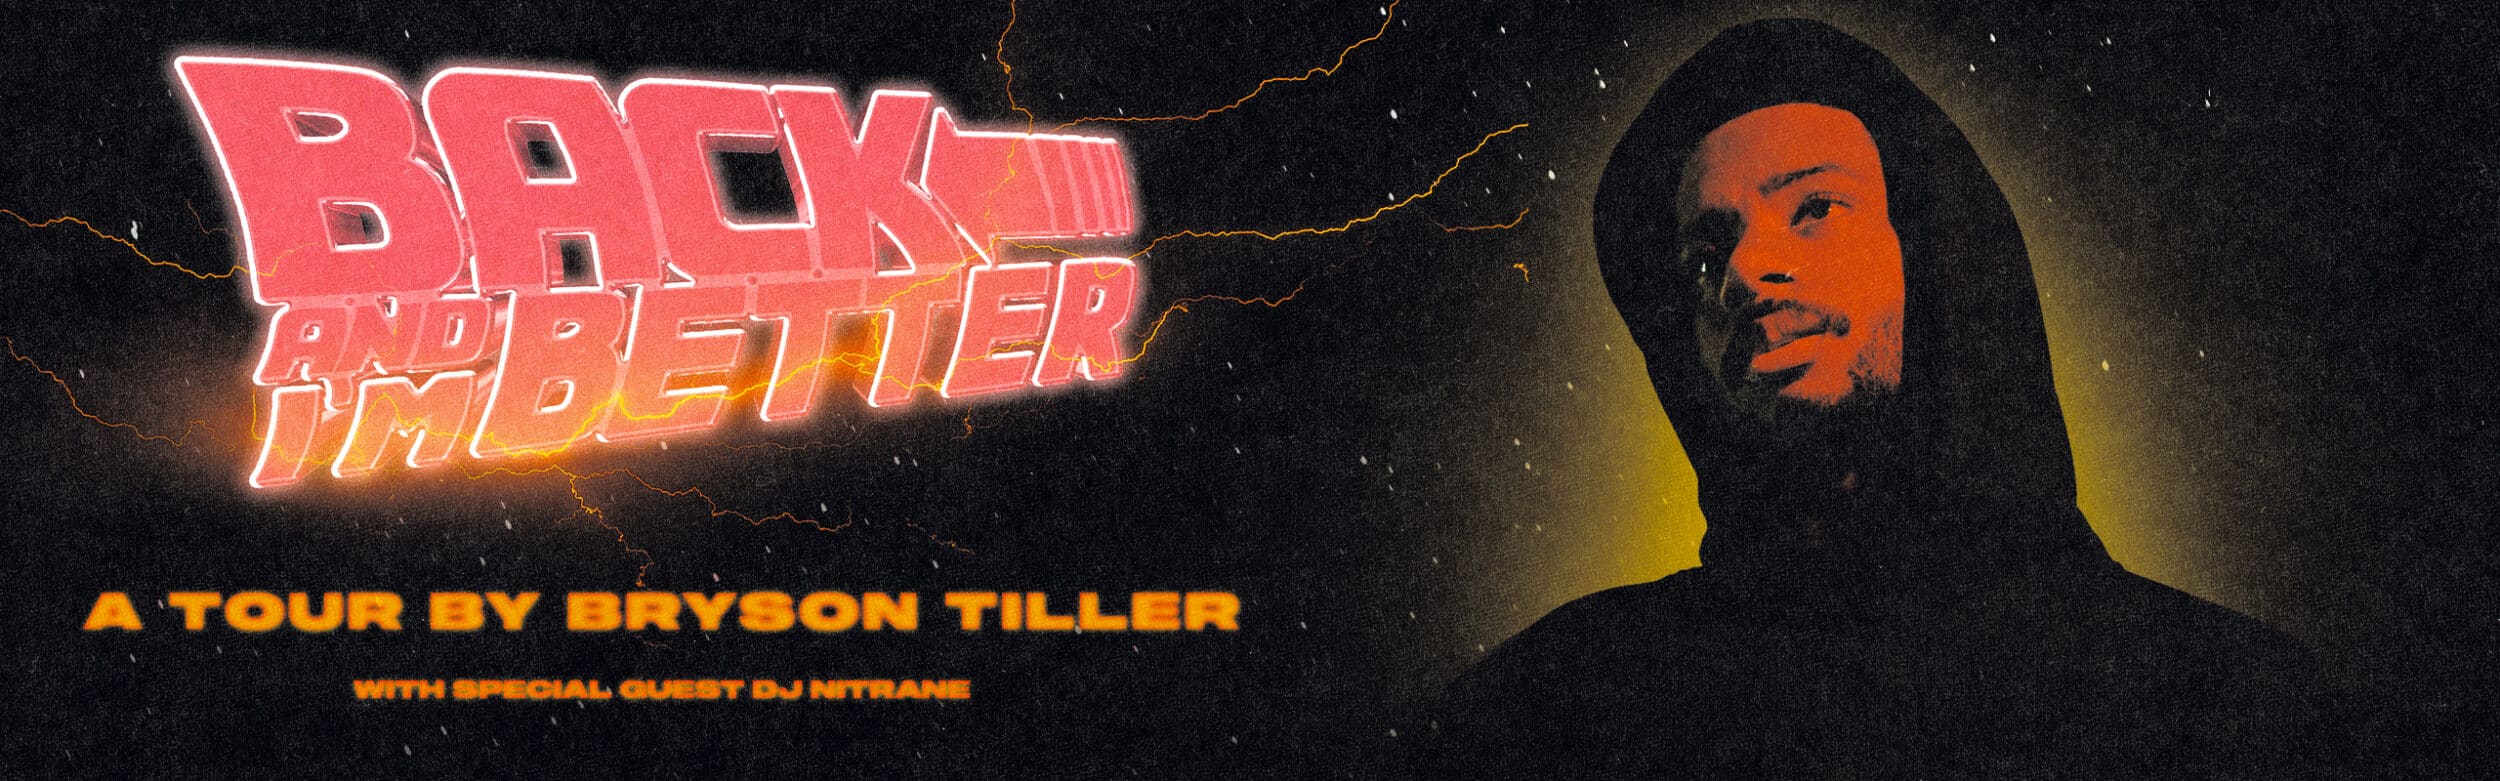 Bryson Tiller – Back and I’m Better Tour